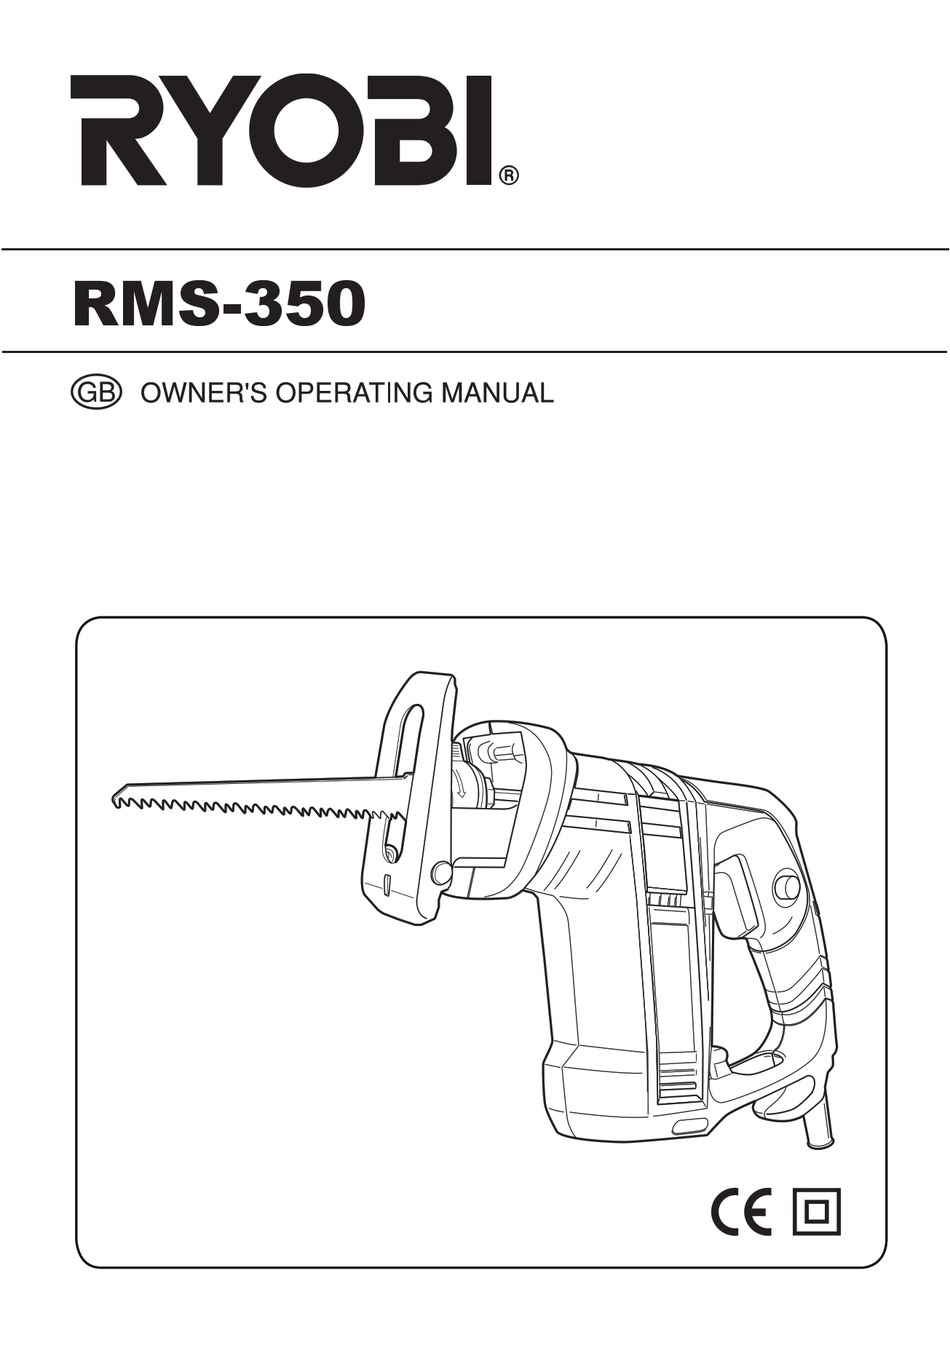 Ryobi Rms 350 Owners Operating Manual Pdf Download Manualslib